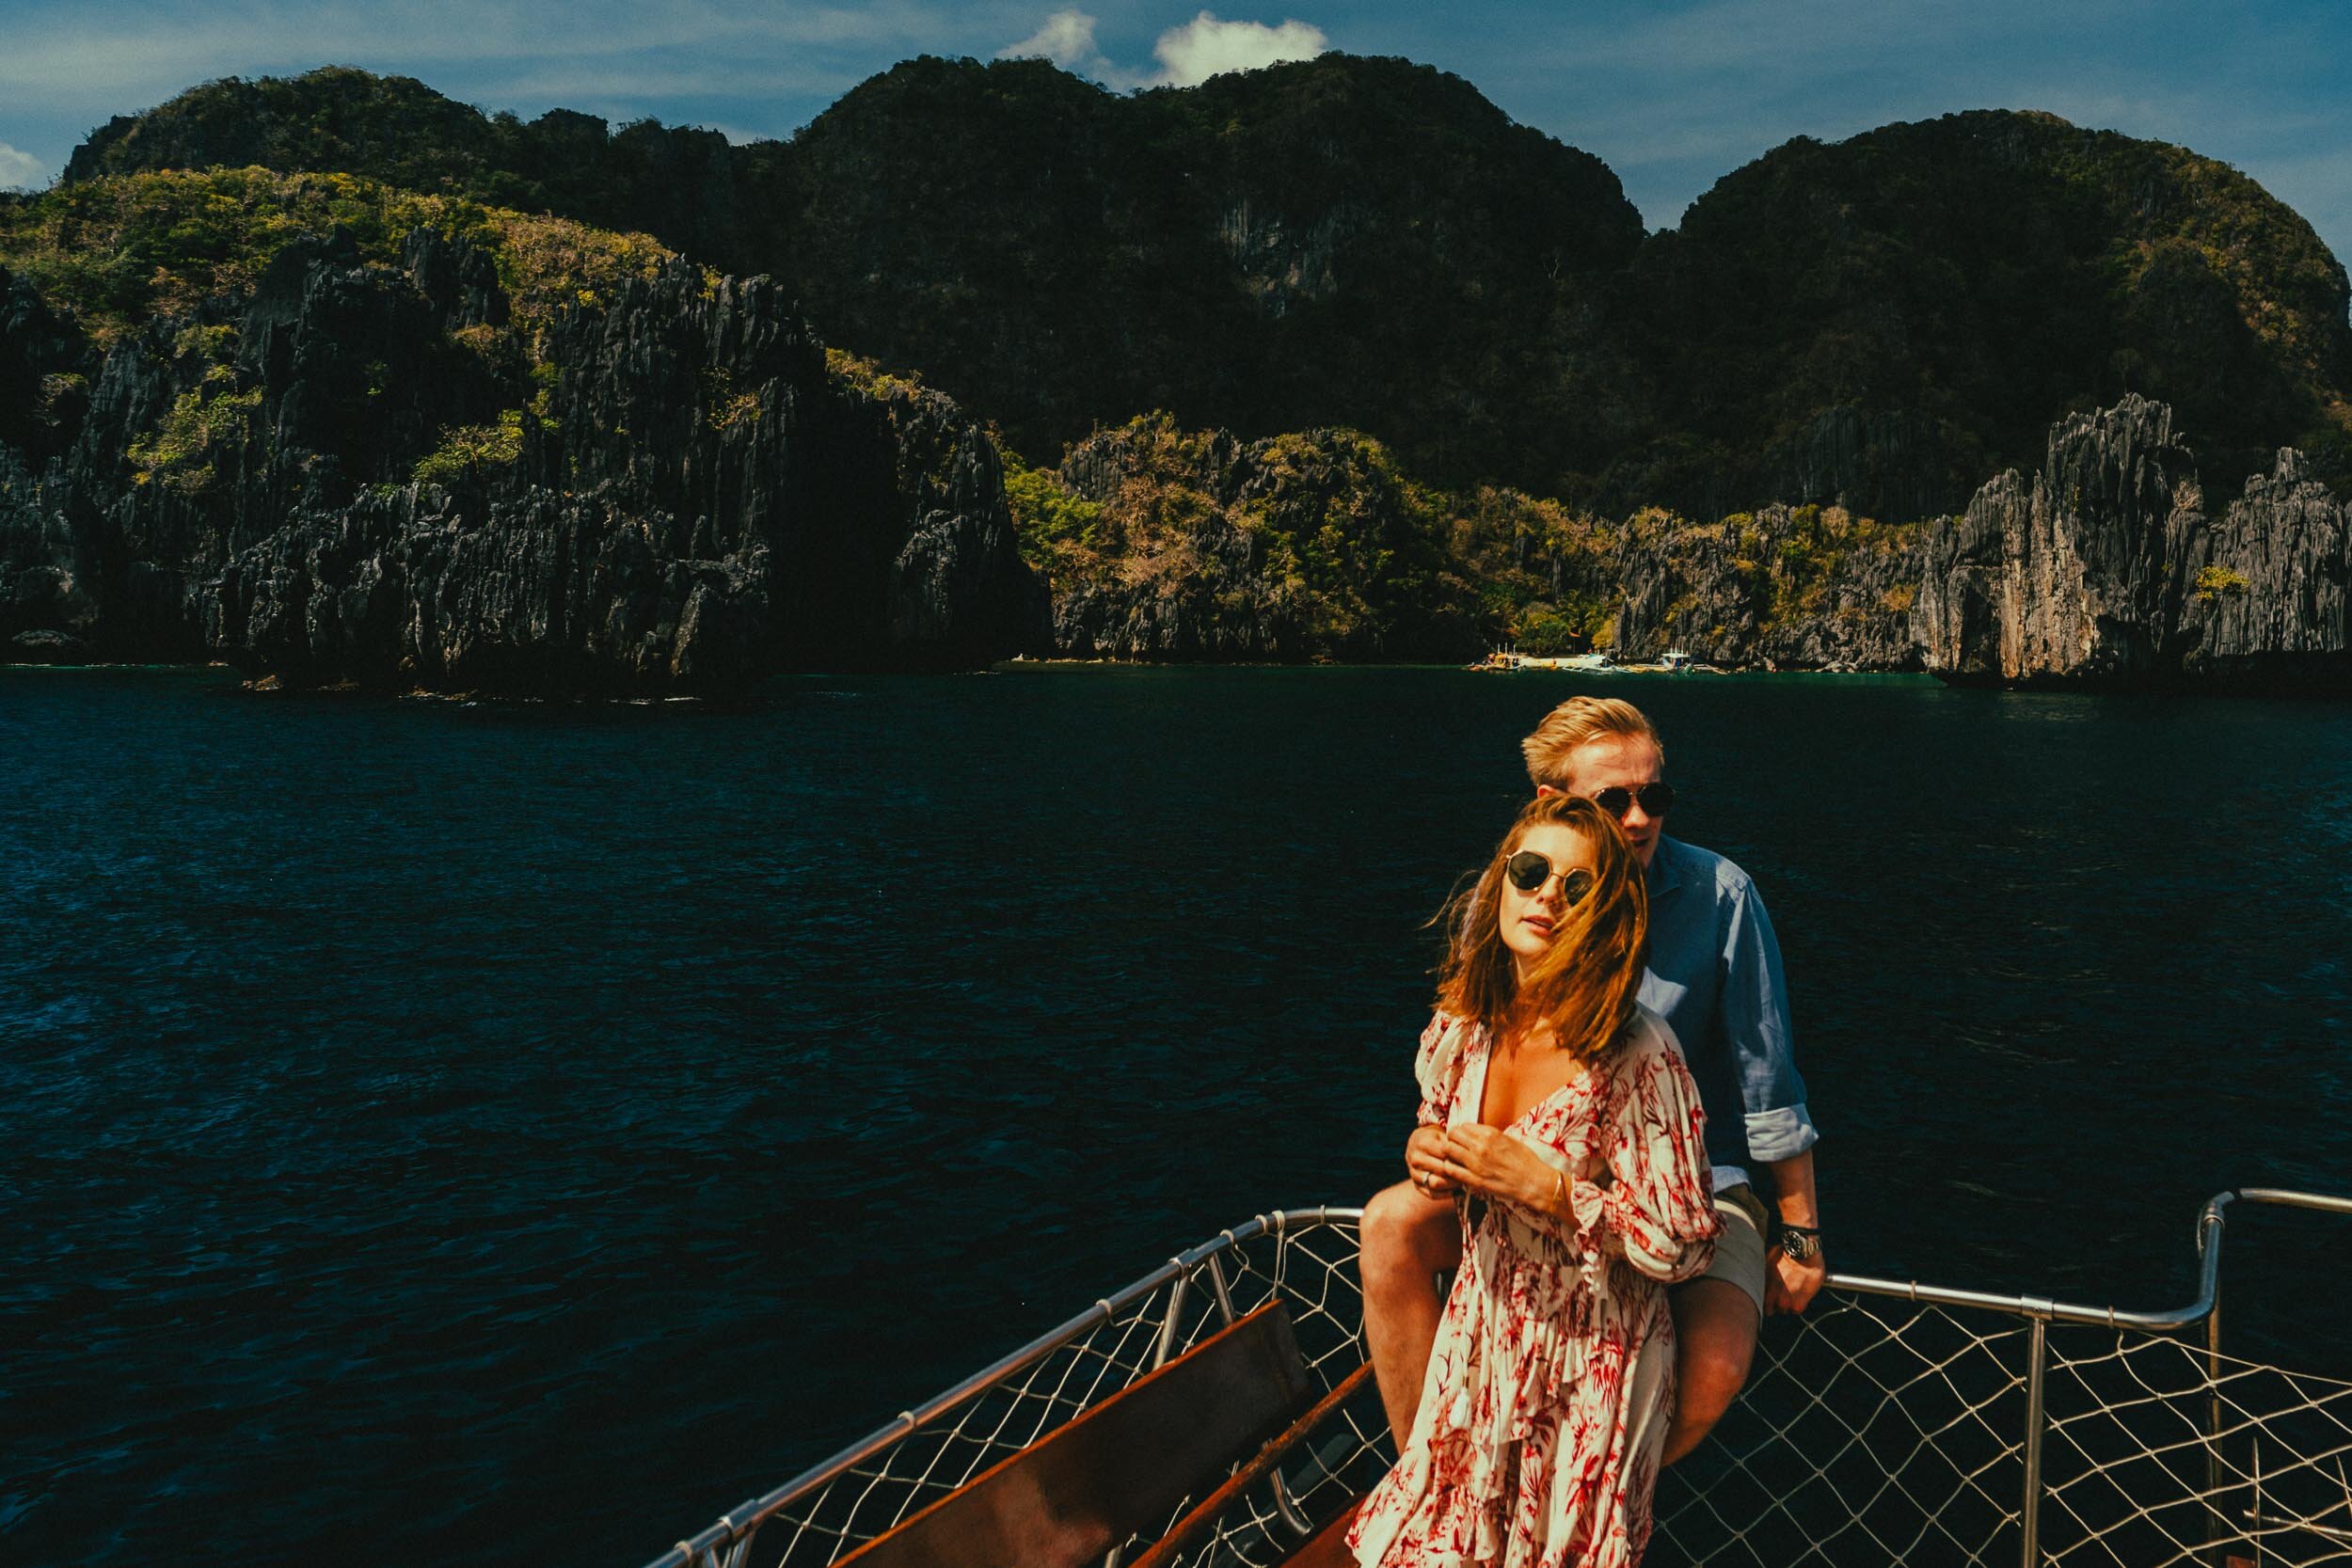 10 El Nido Philippines Couple Photography An island hopping honeymoon shoot in Palawan. March 2020. Travel couple photos in Southeast Asia x @hejguj.jpg